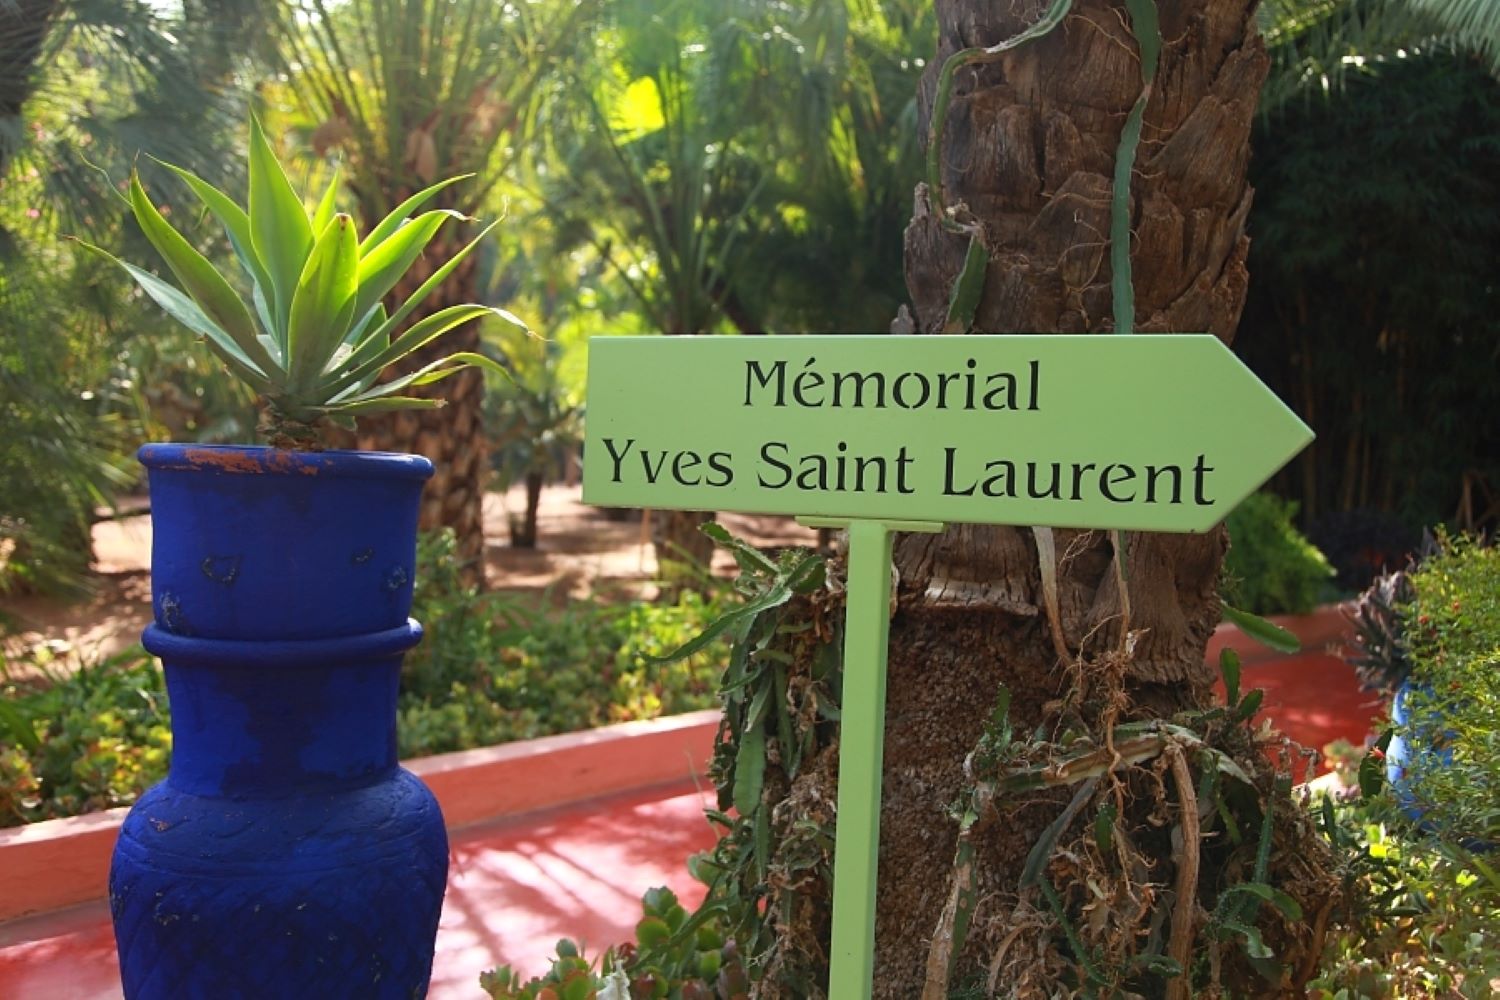 Cesta do Marrákeše: Yves Saint Laurent, jeho srdcová vila a zahrada Majorelle